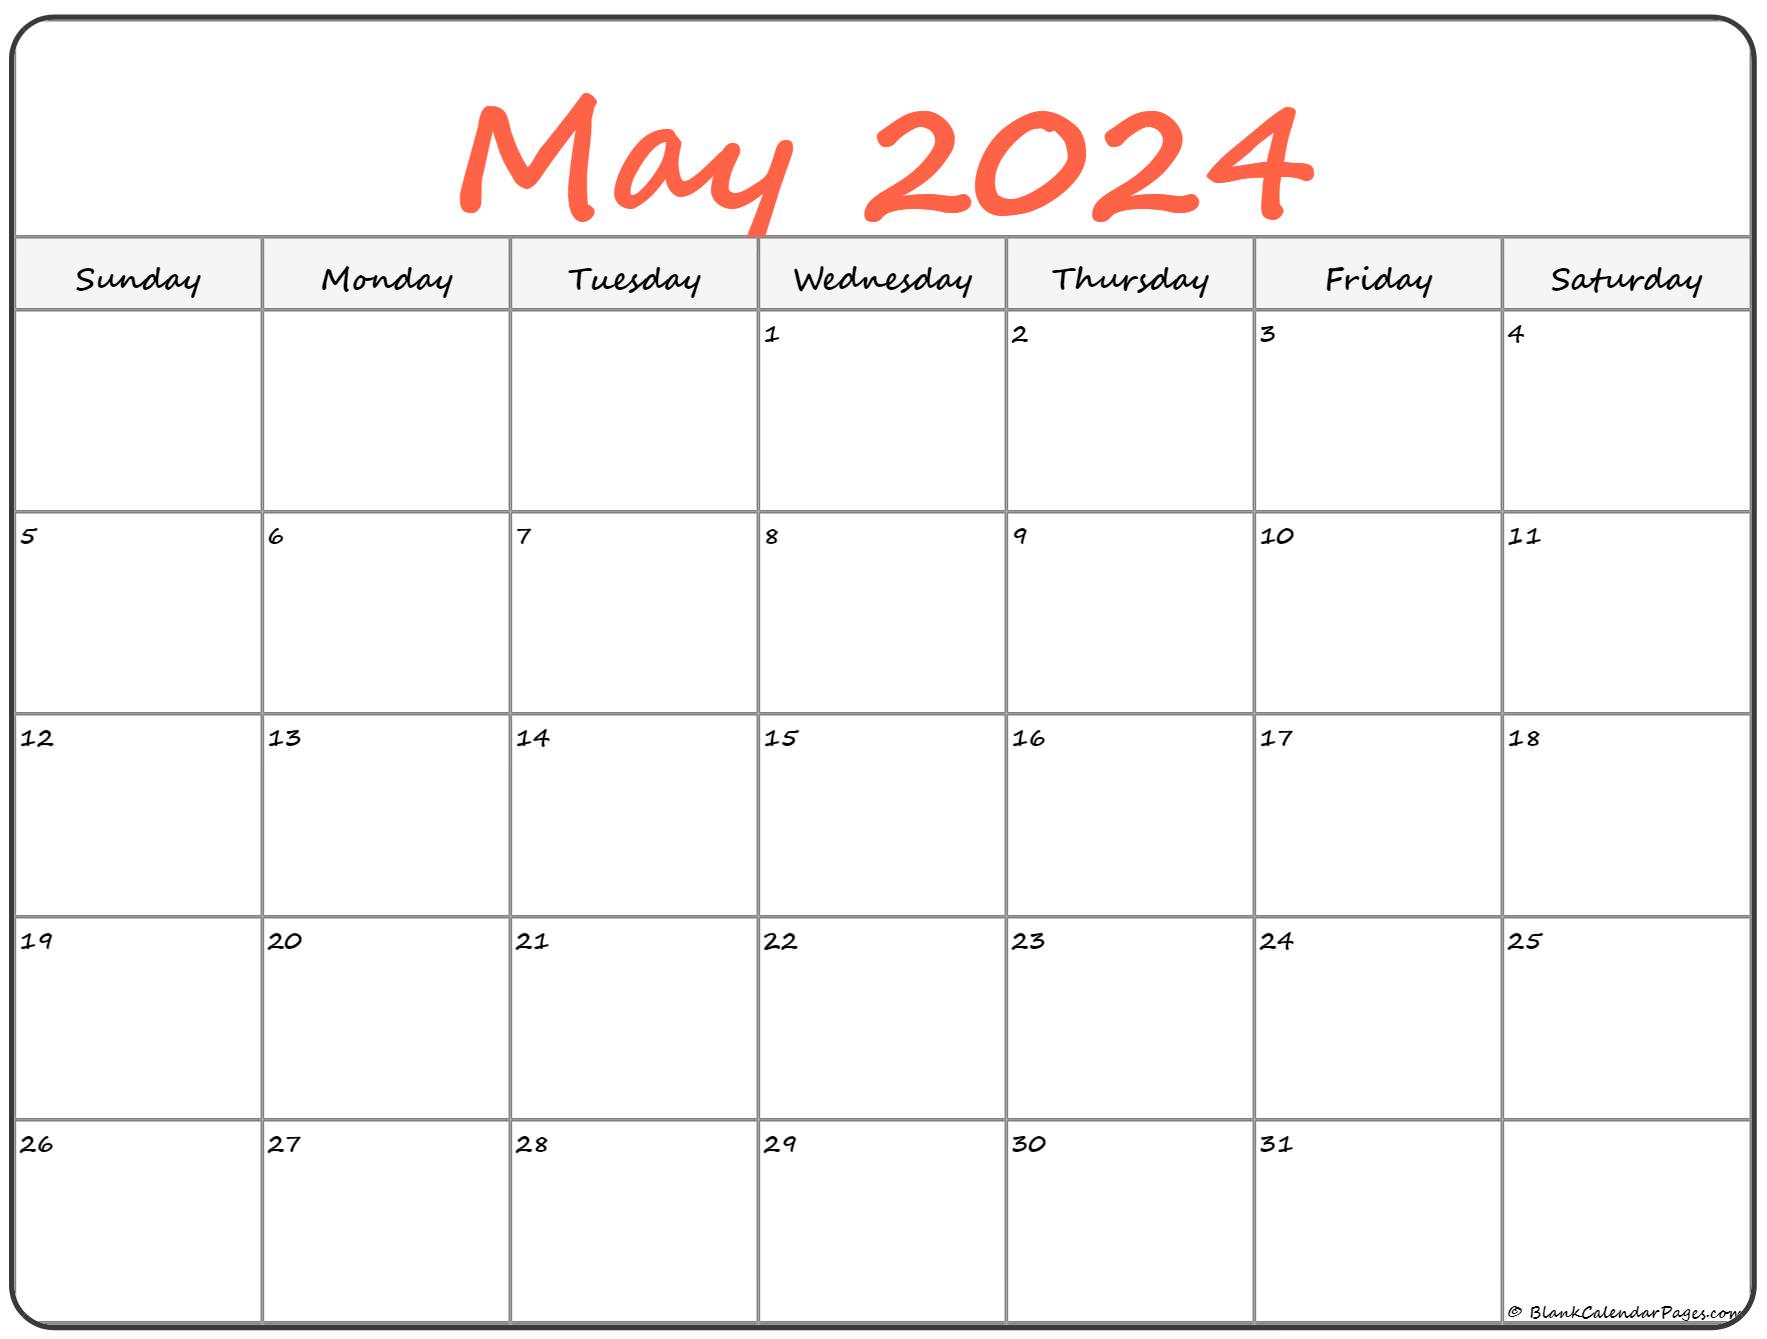 may 2023 calendar free printable calendar - may 2023 calendar printable | printable calendar may 2023